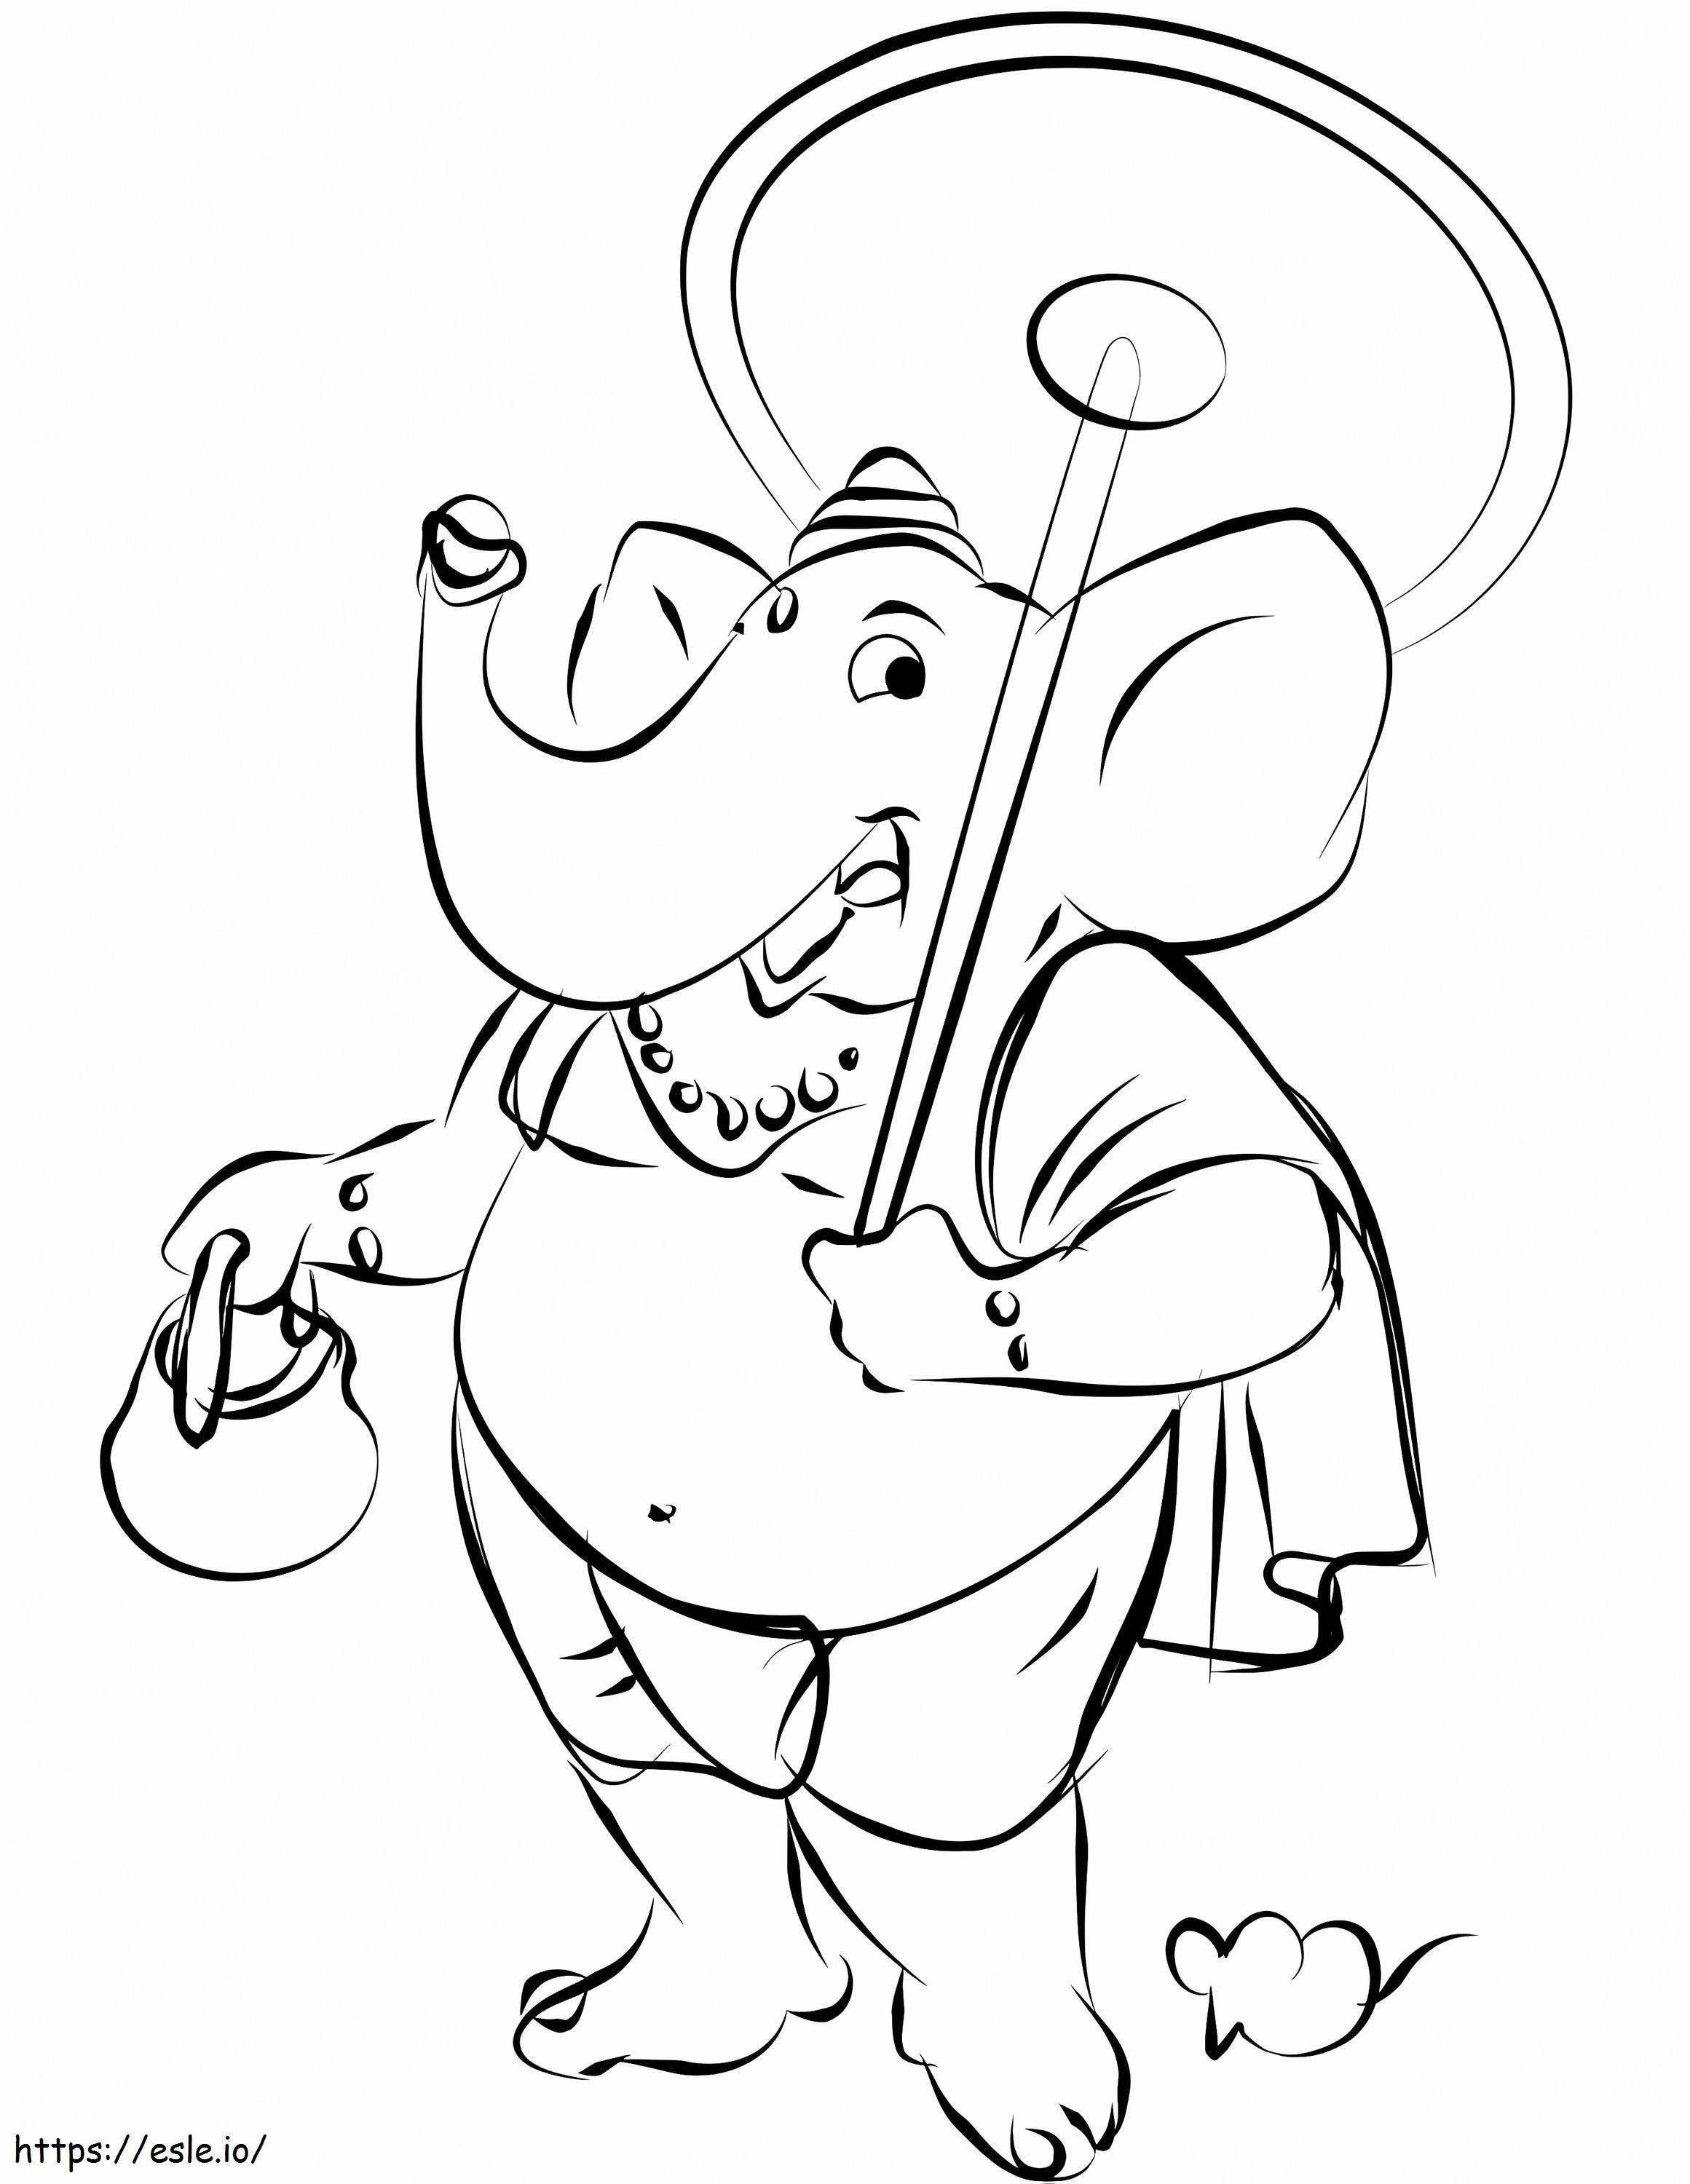 Cartoon-Ganesha ausmalbilder